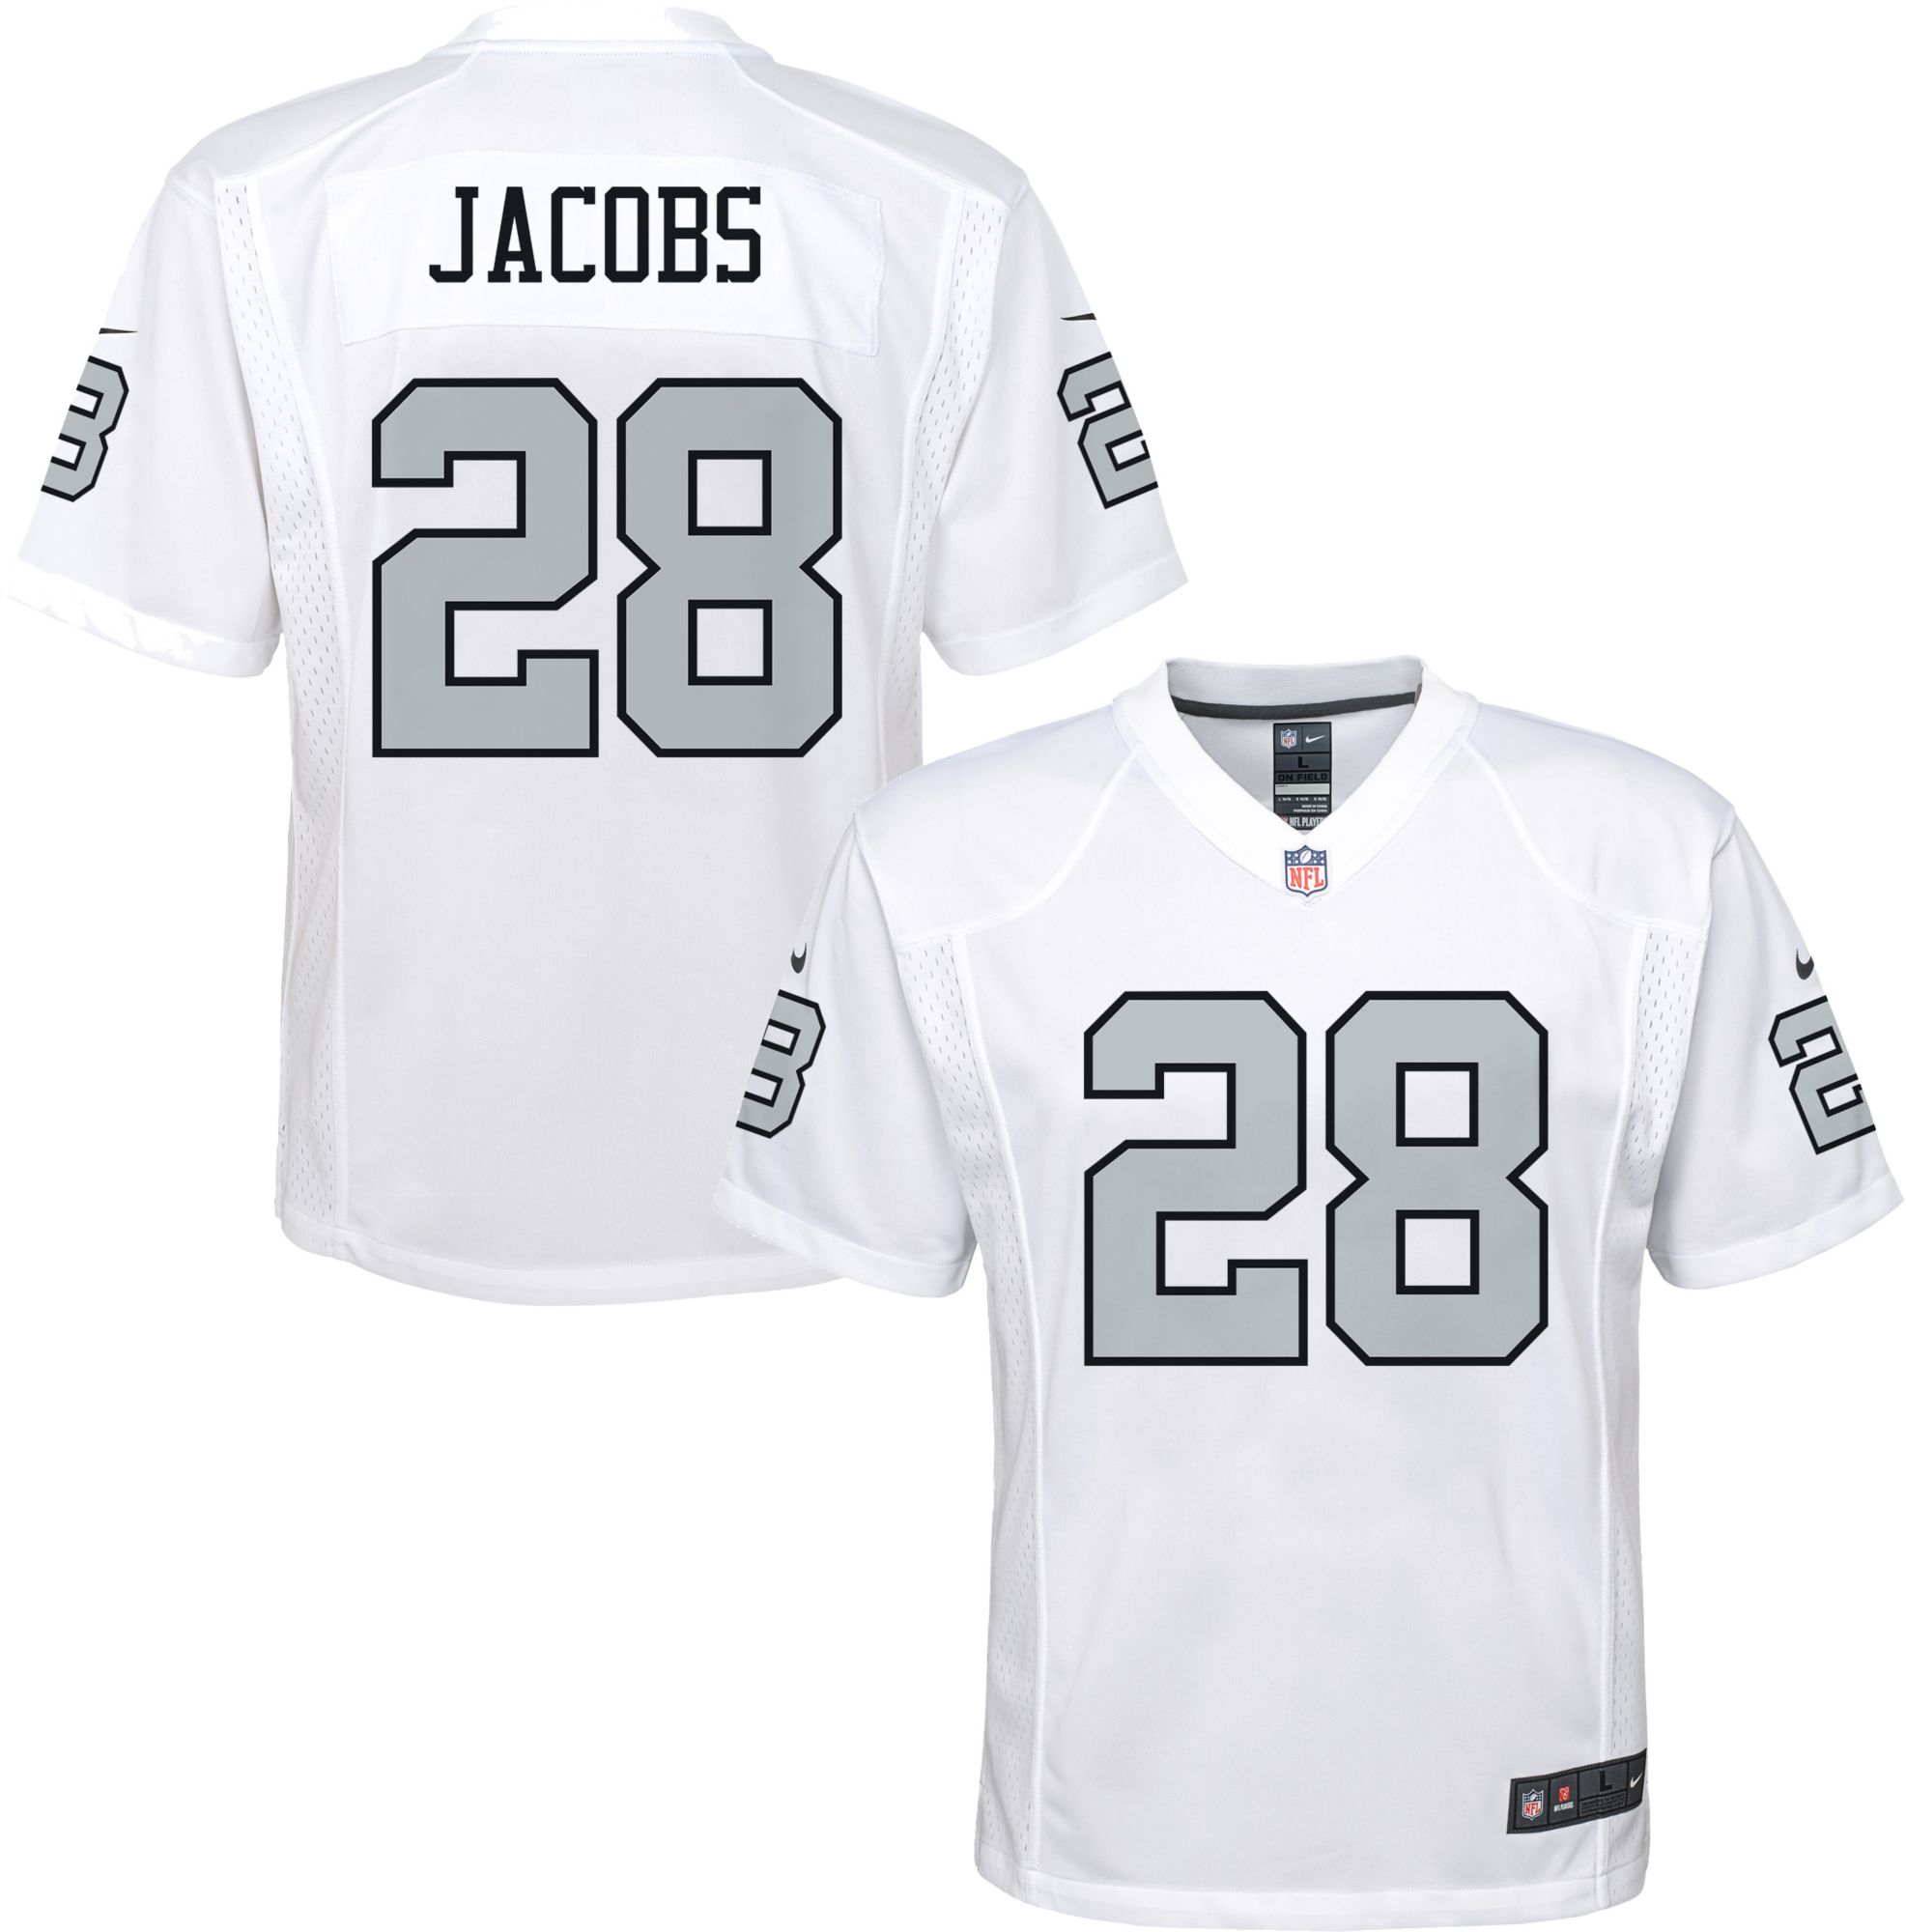 raiders jacobs jersey